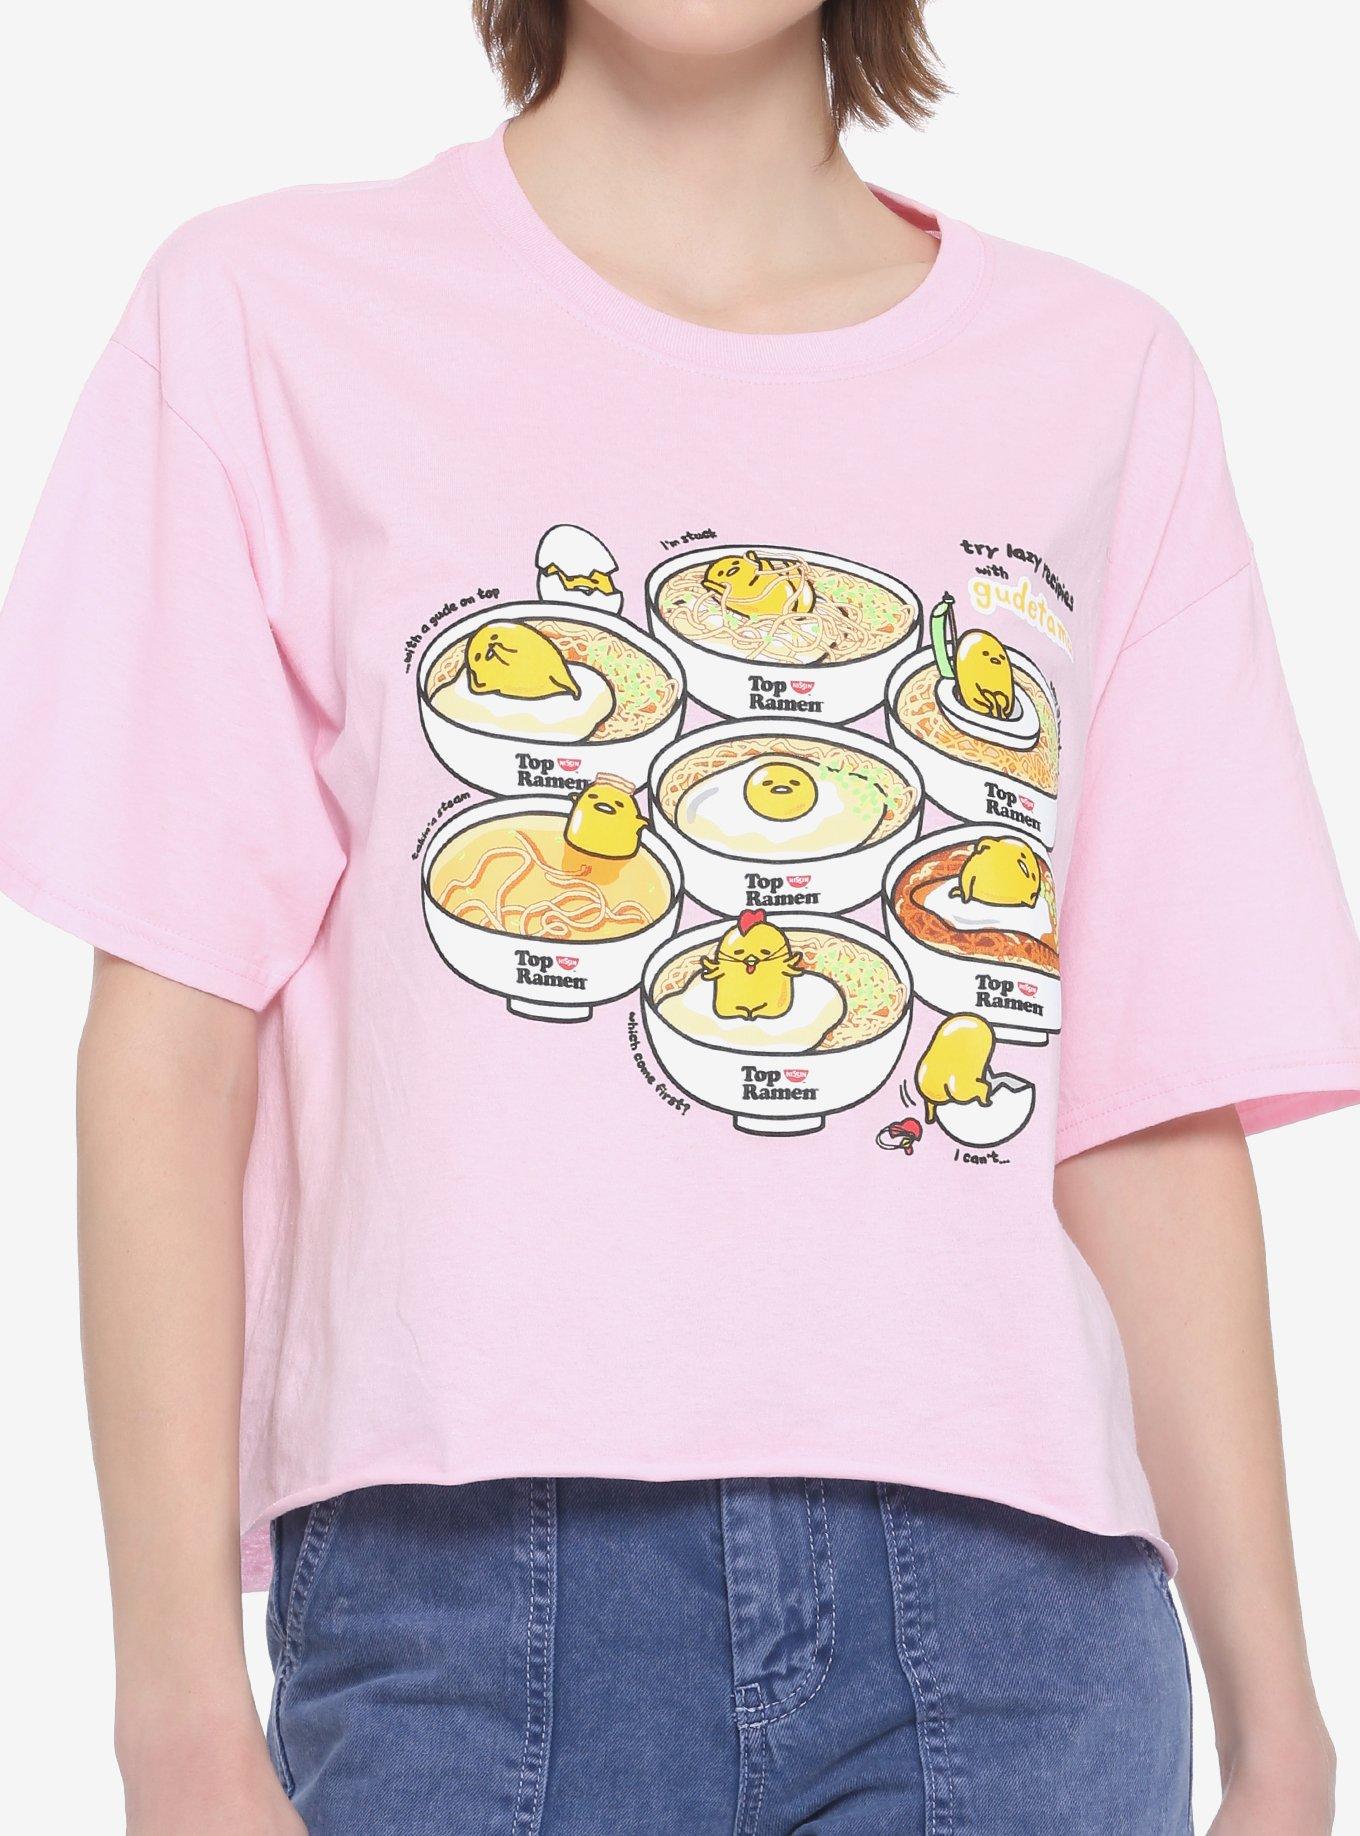 Nissin Top Ramen x Gudetama Lazy Recipes Girls Crop T-Shirt | Hot Topic